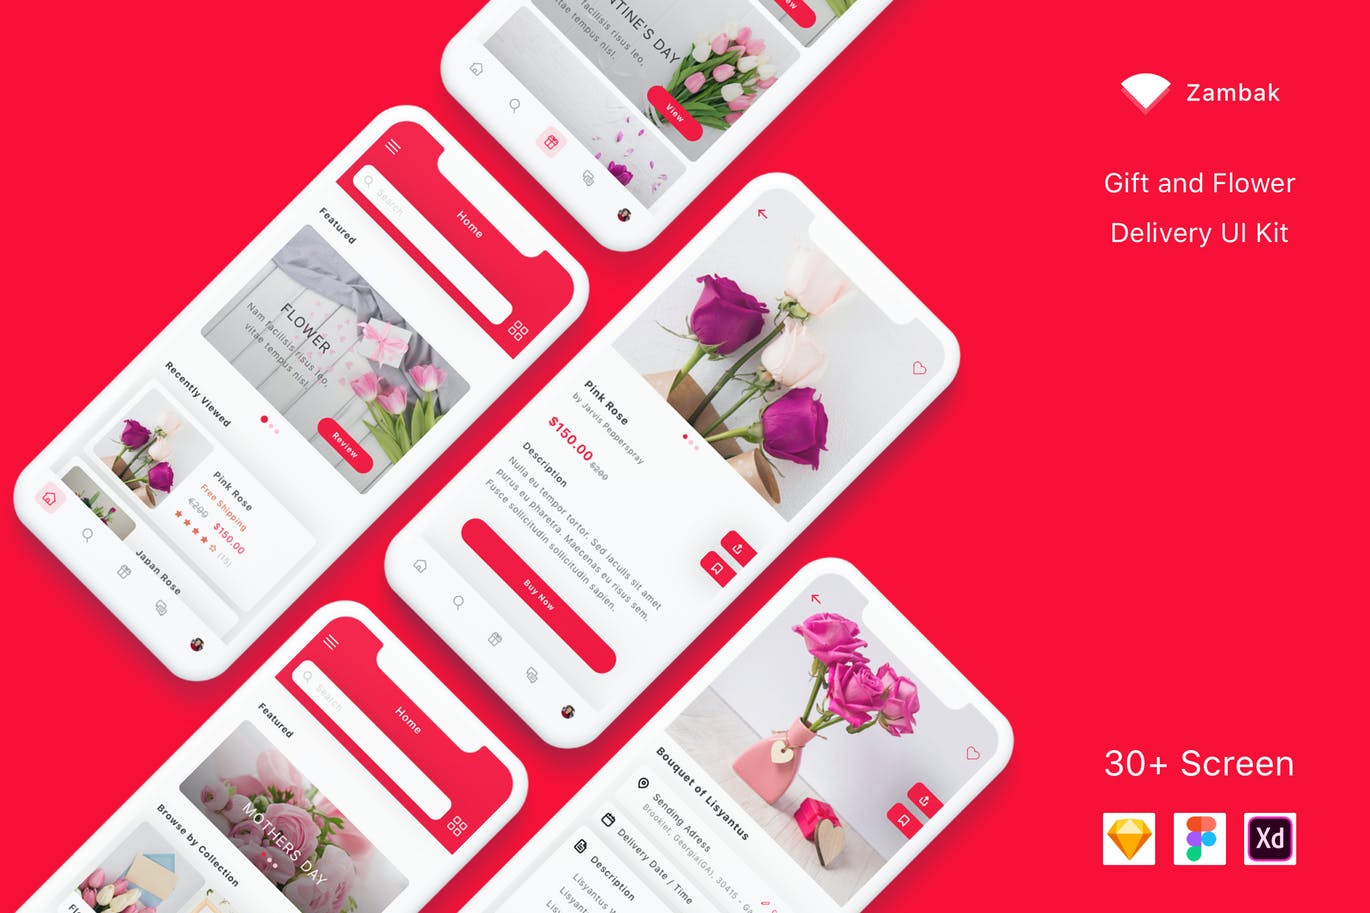 礼品&鲜花预订服务APP应用UI设计16图库精选套件 Zambak – Gift and Flower Delivery App UI Kit插图